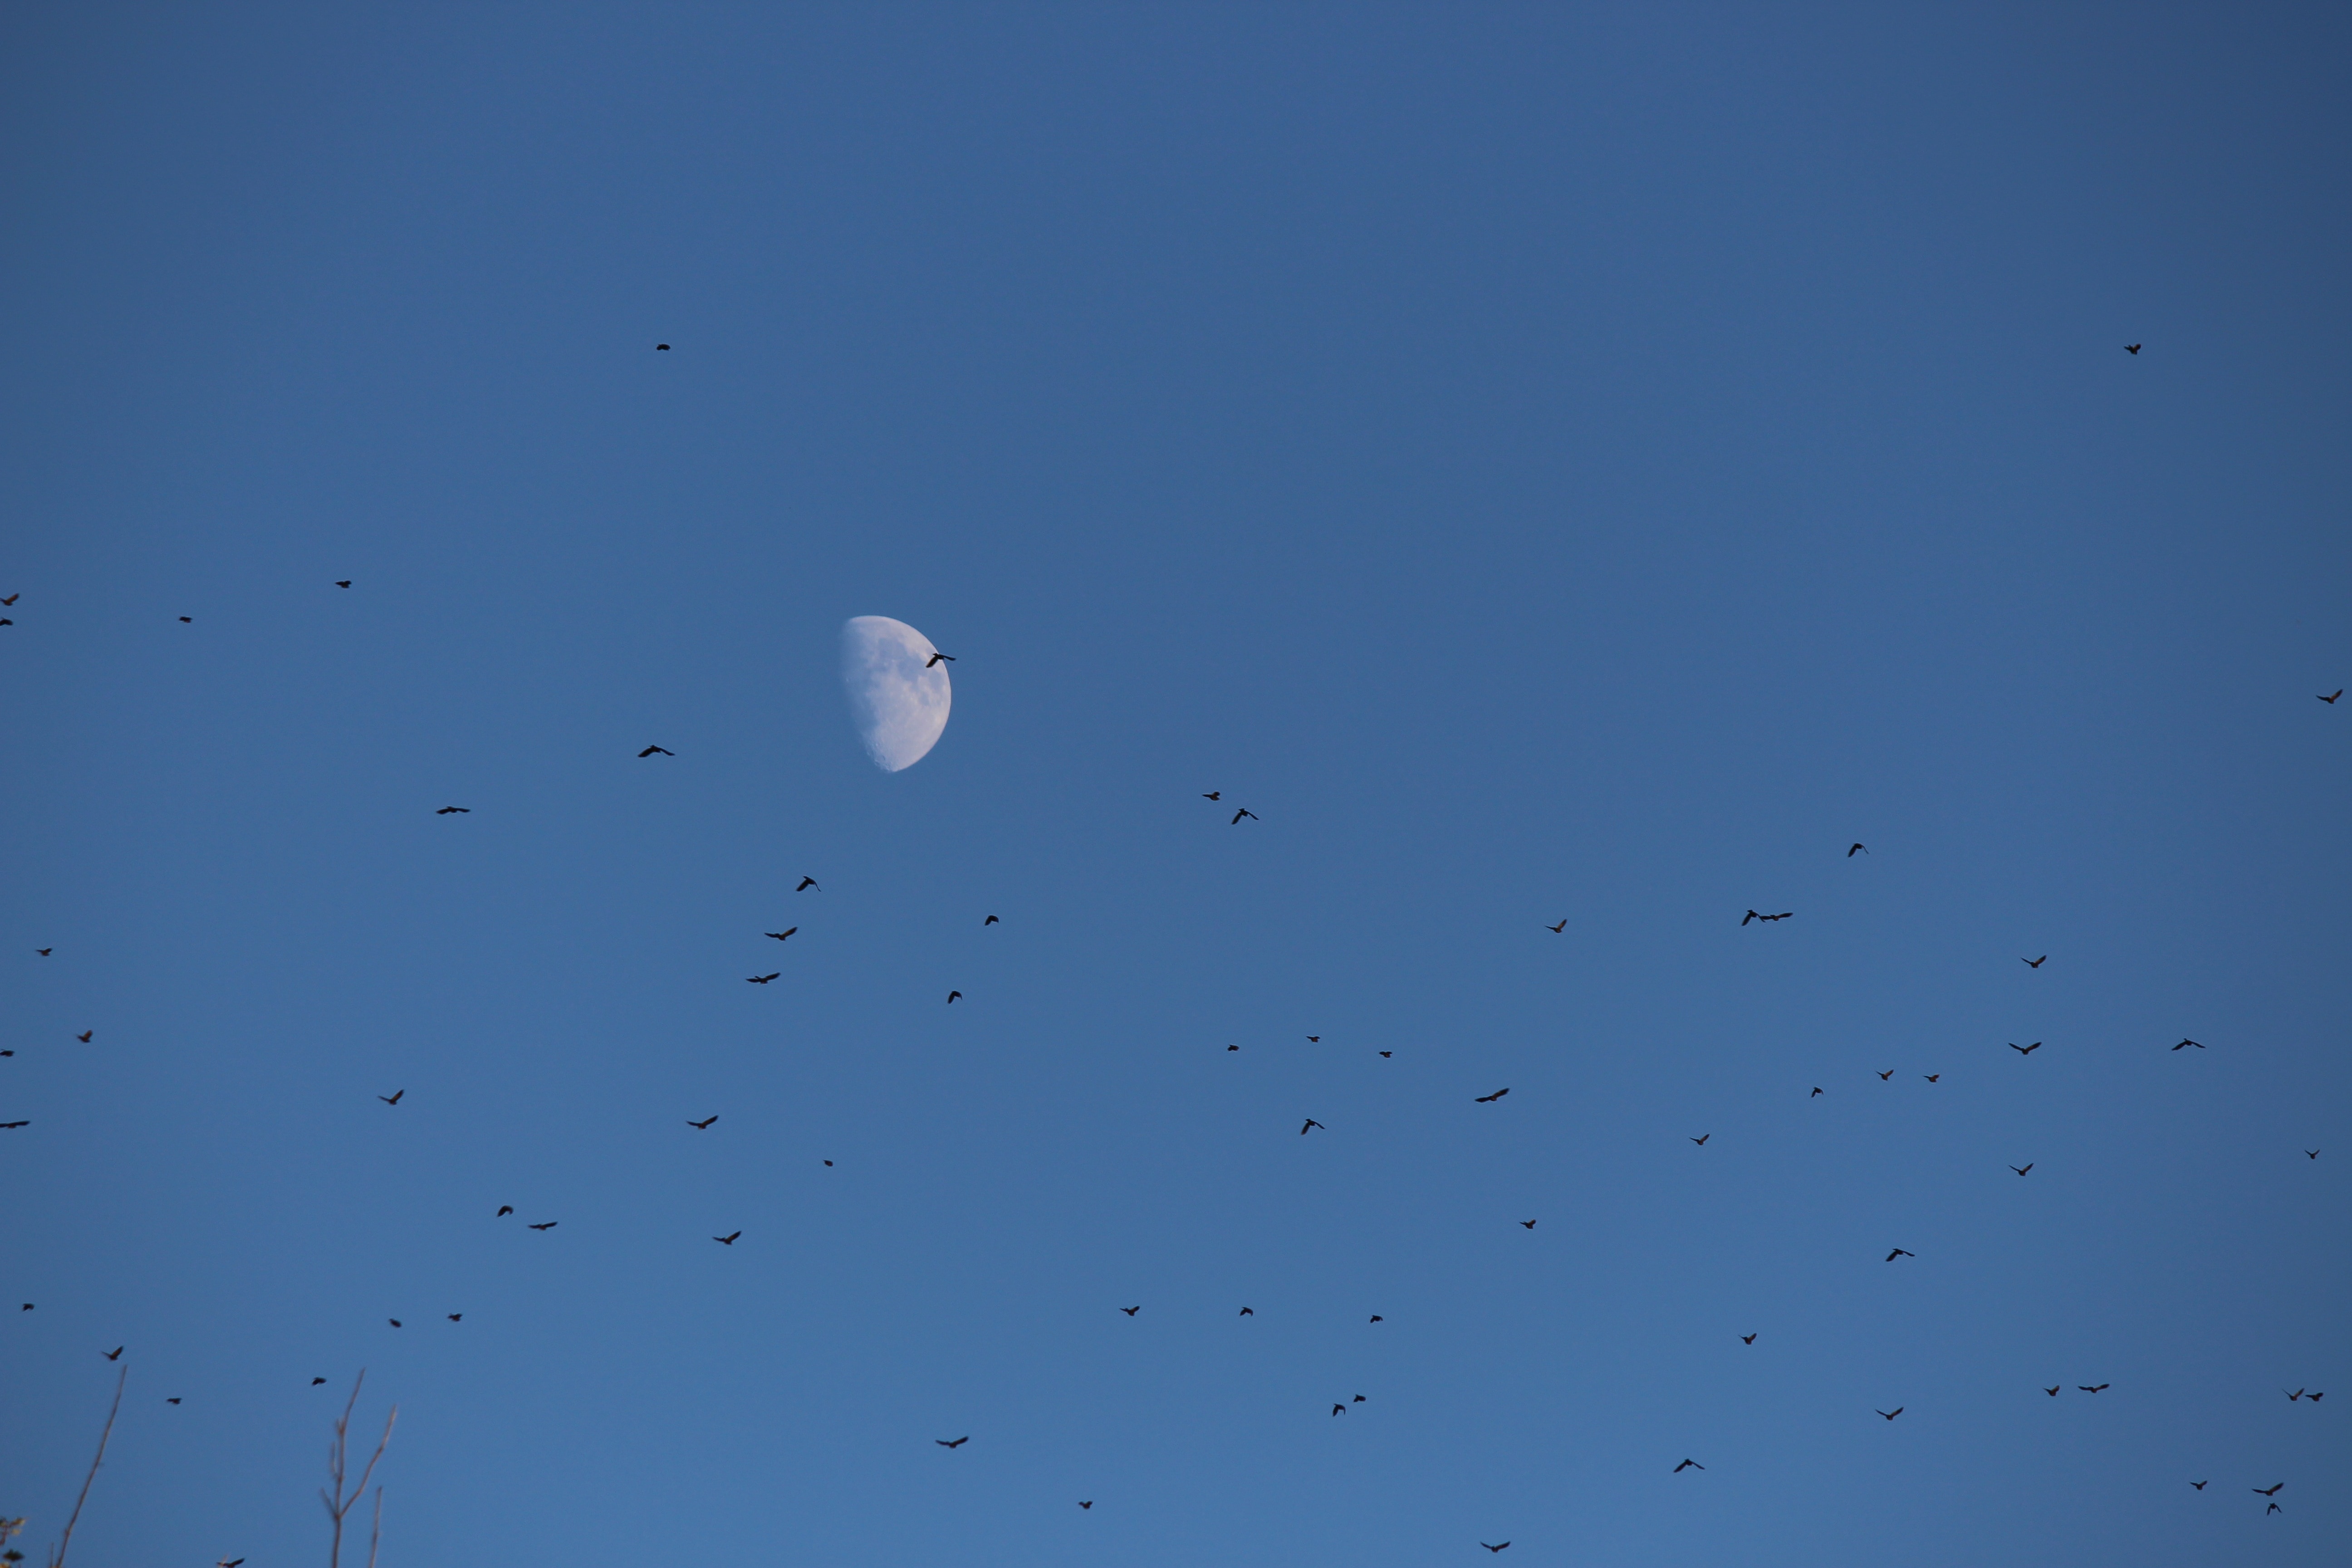 birds flying with overlooking of moon